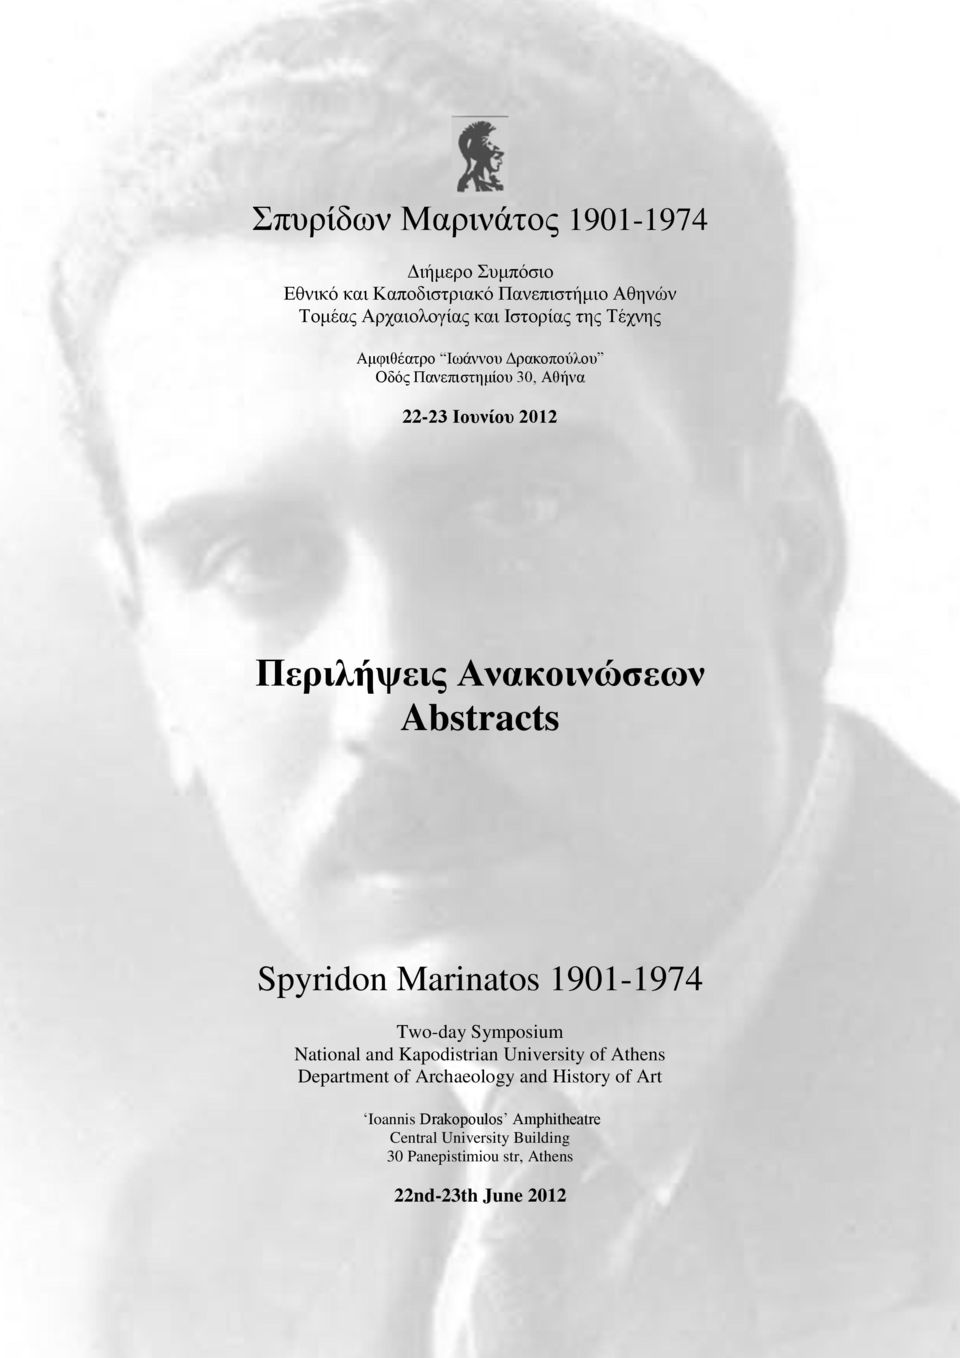 Spyridon Marinatos 1901-1974 Two-day Symposium National and Kapodistrian University of Athens Department of Archaeology and